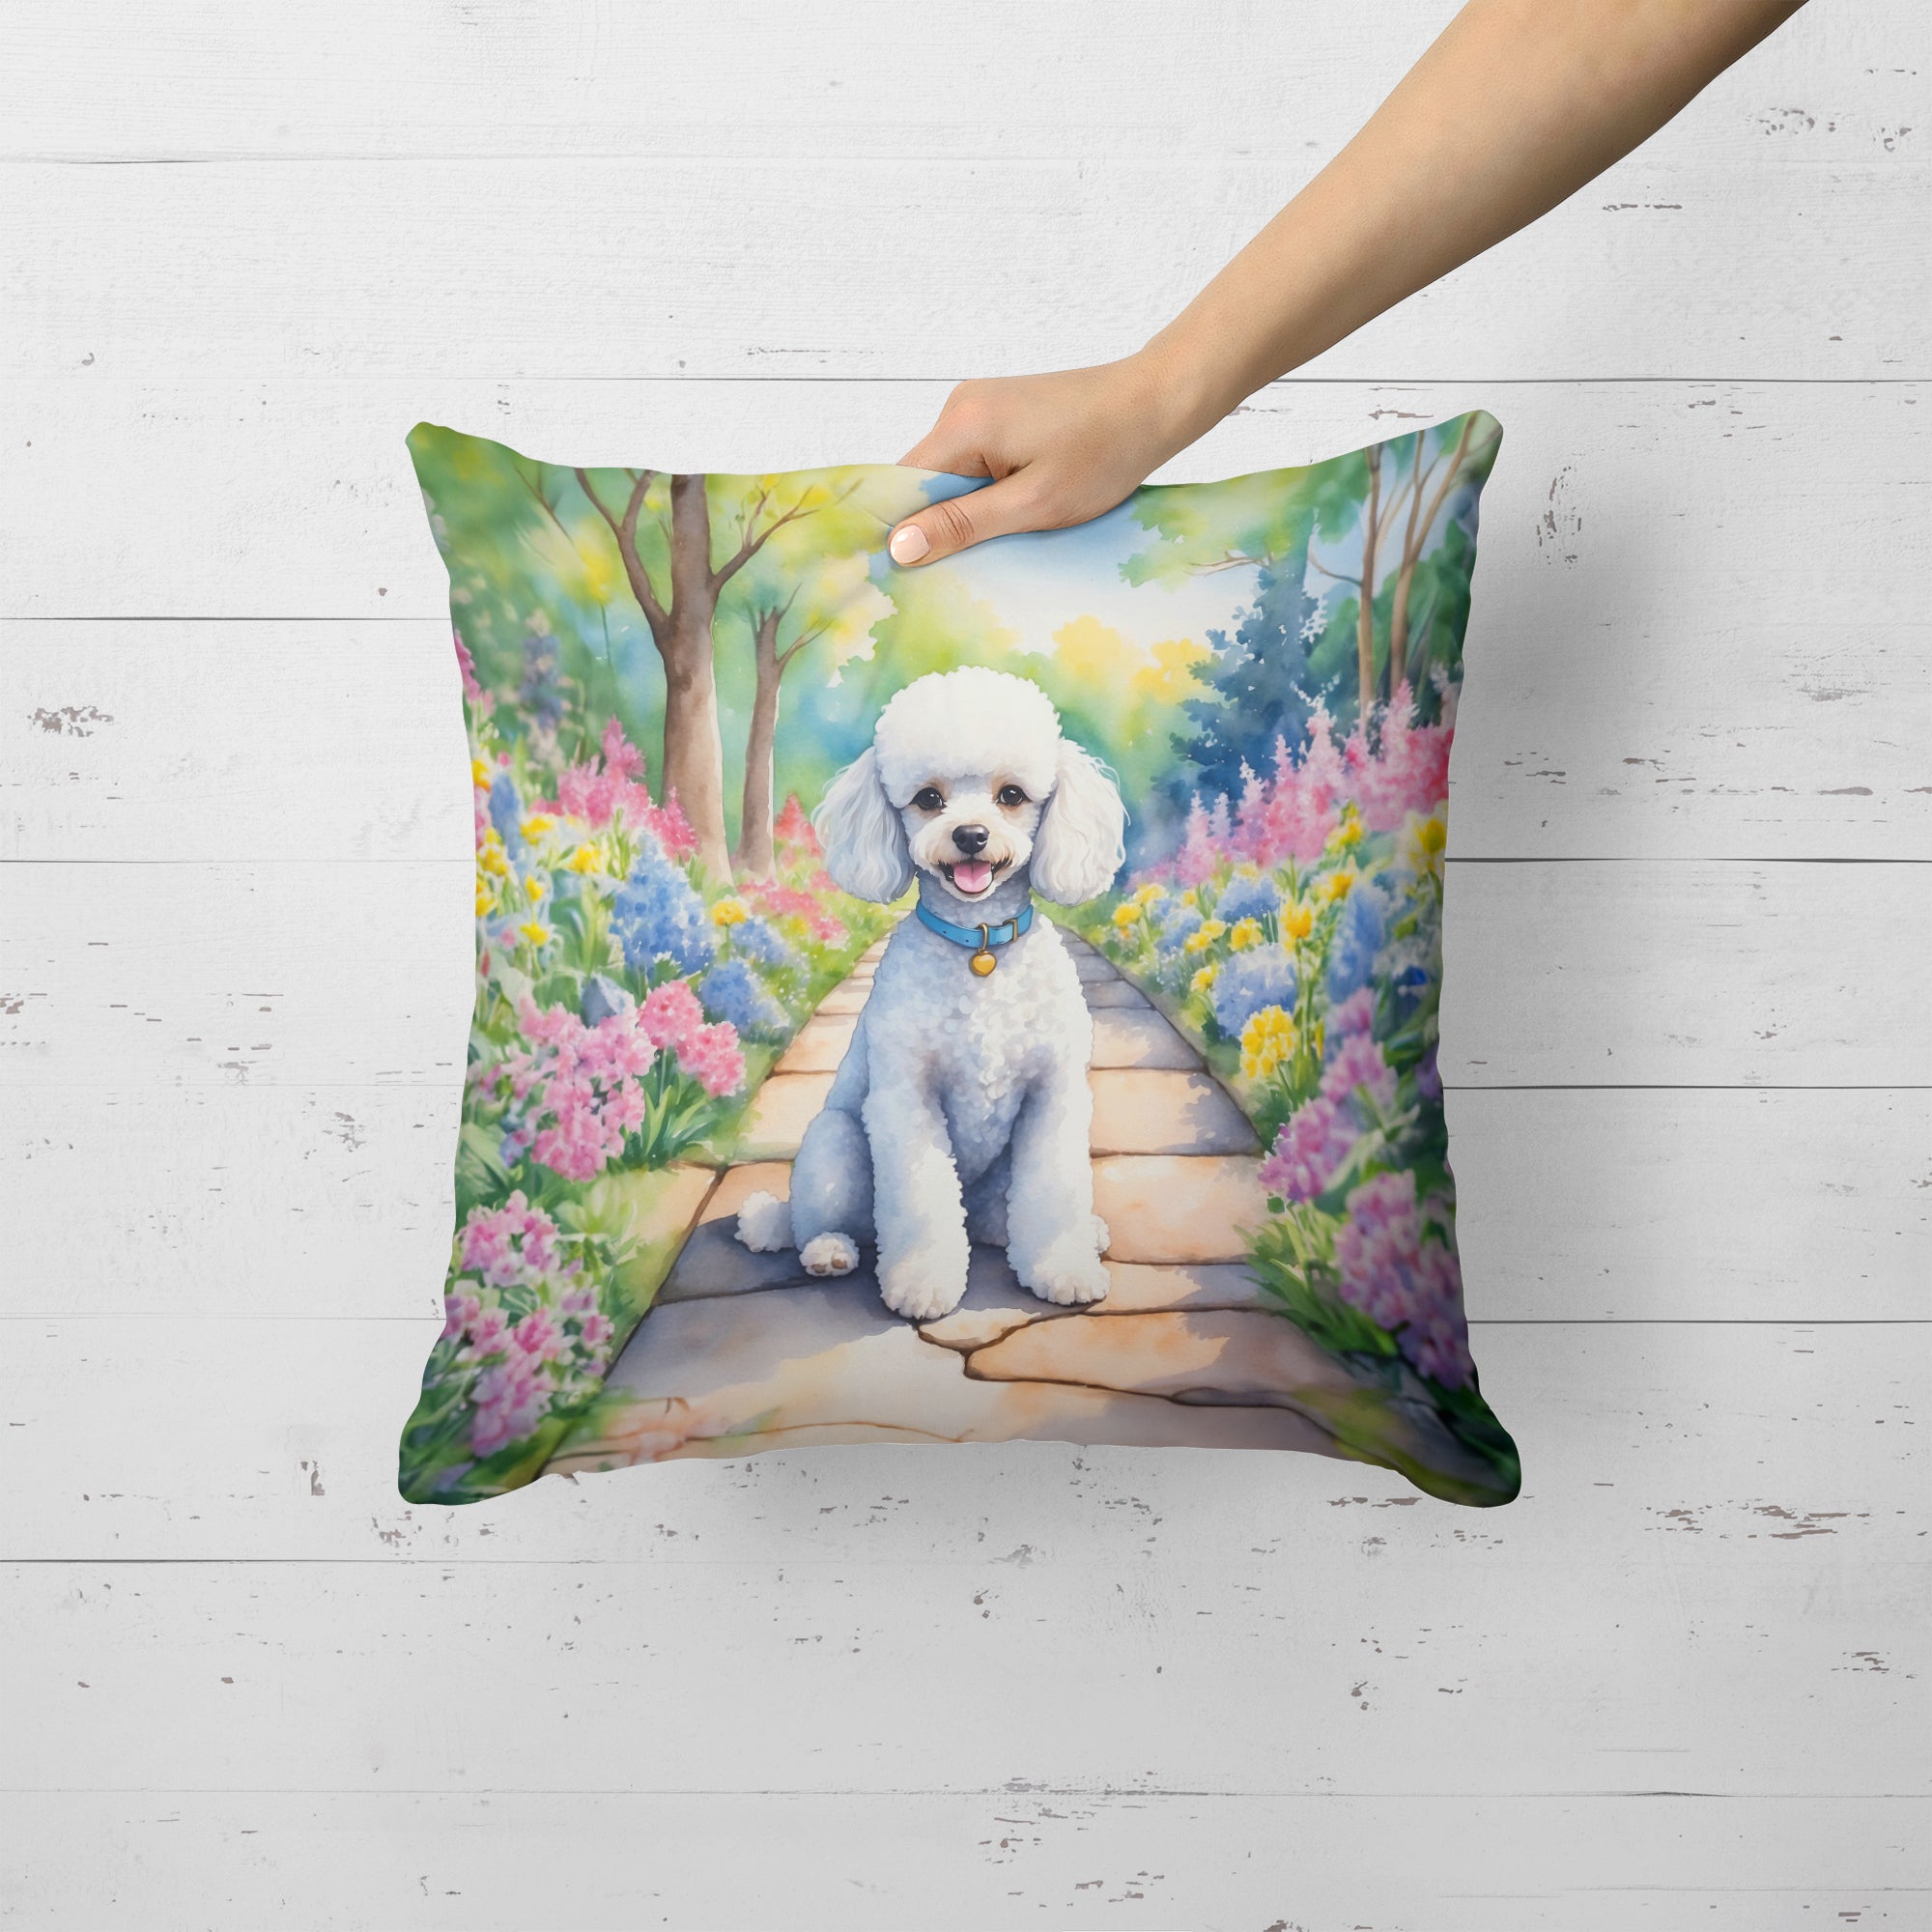 Buy this White Poodle Spring Path Throw Pillow